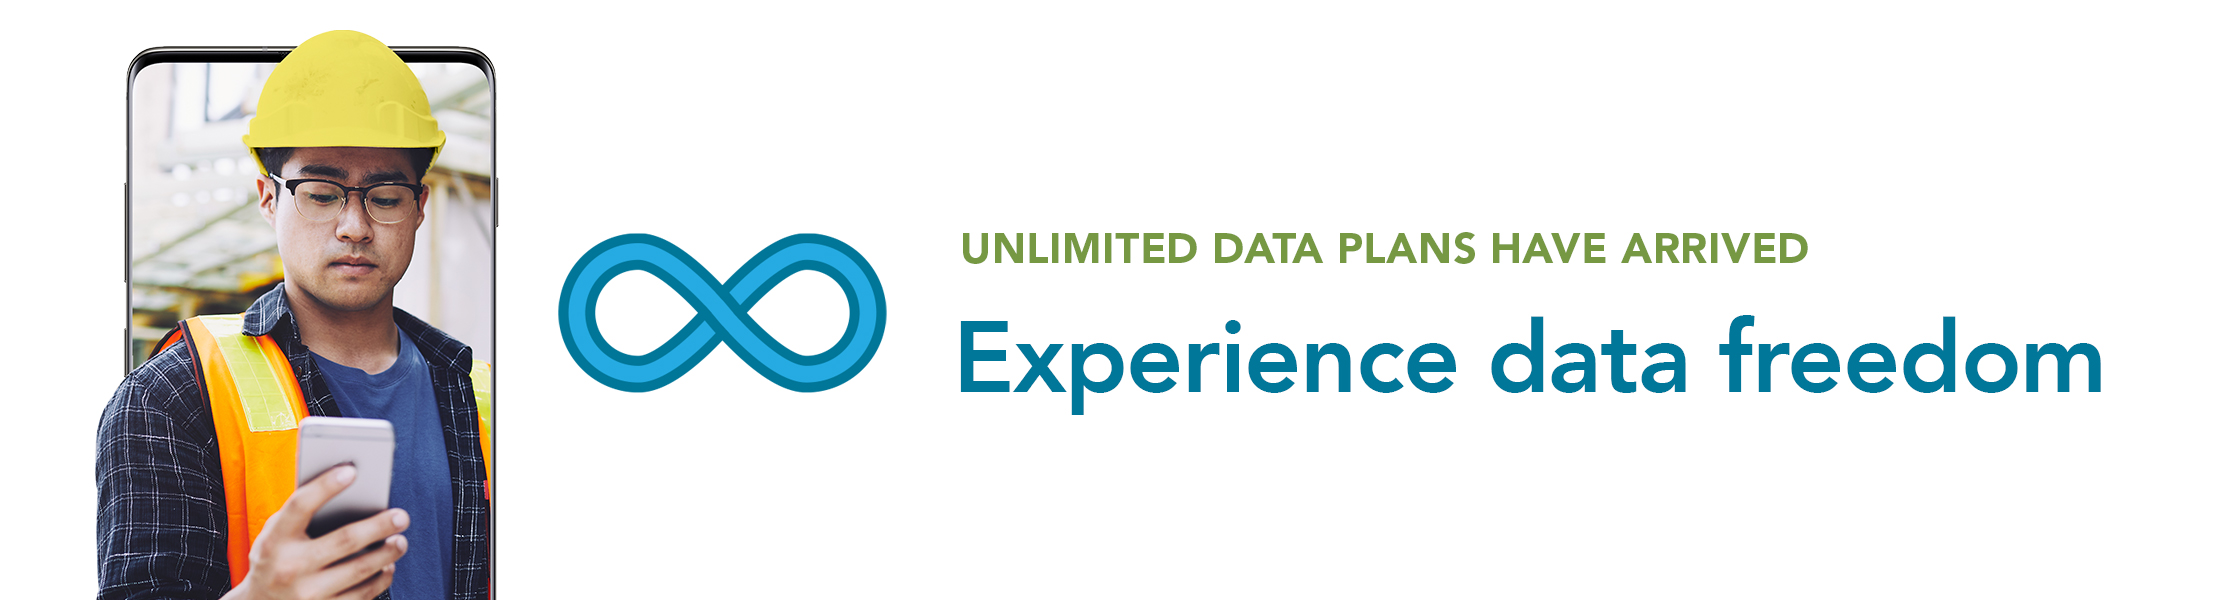 Unlimited Data Plans